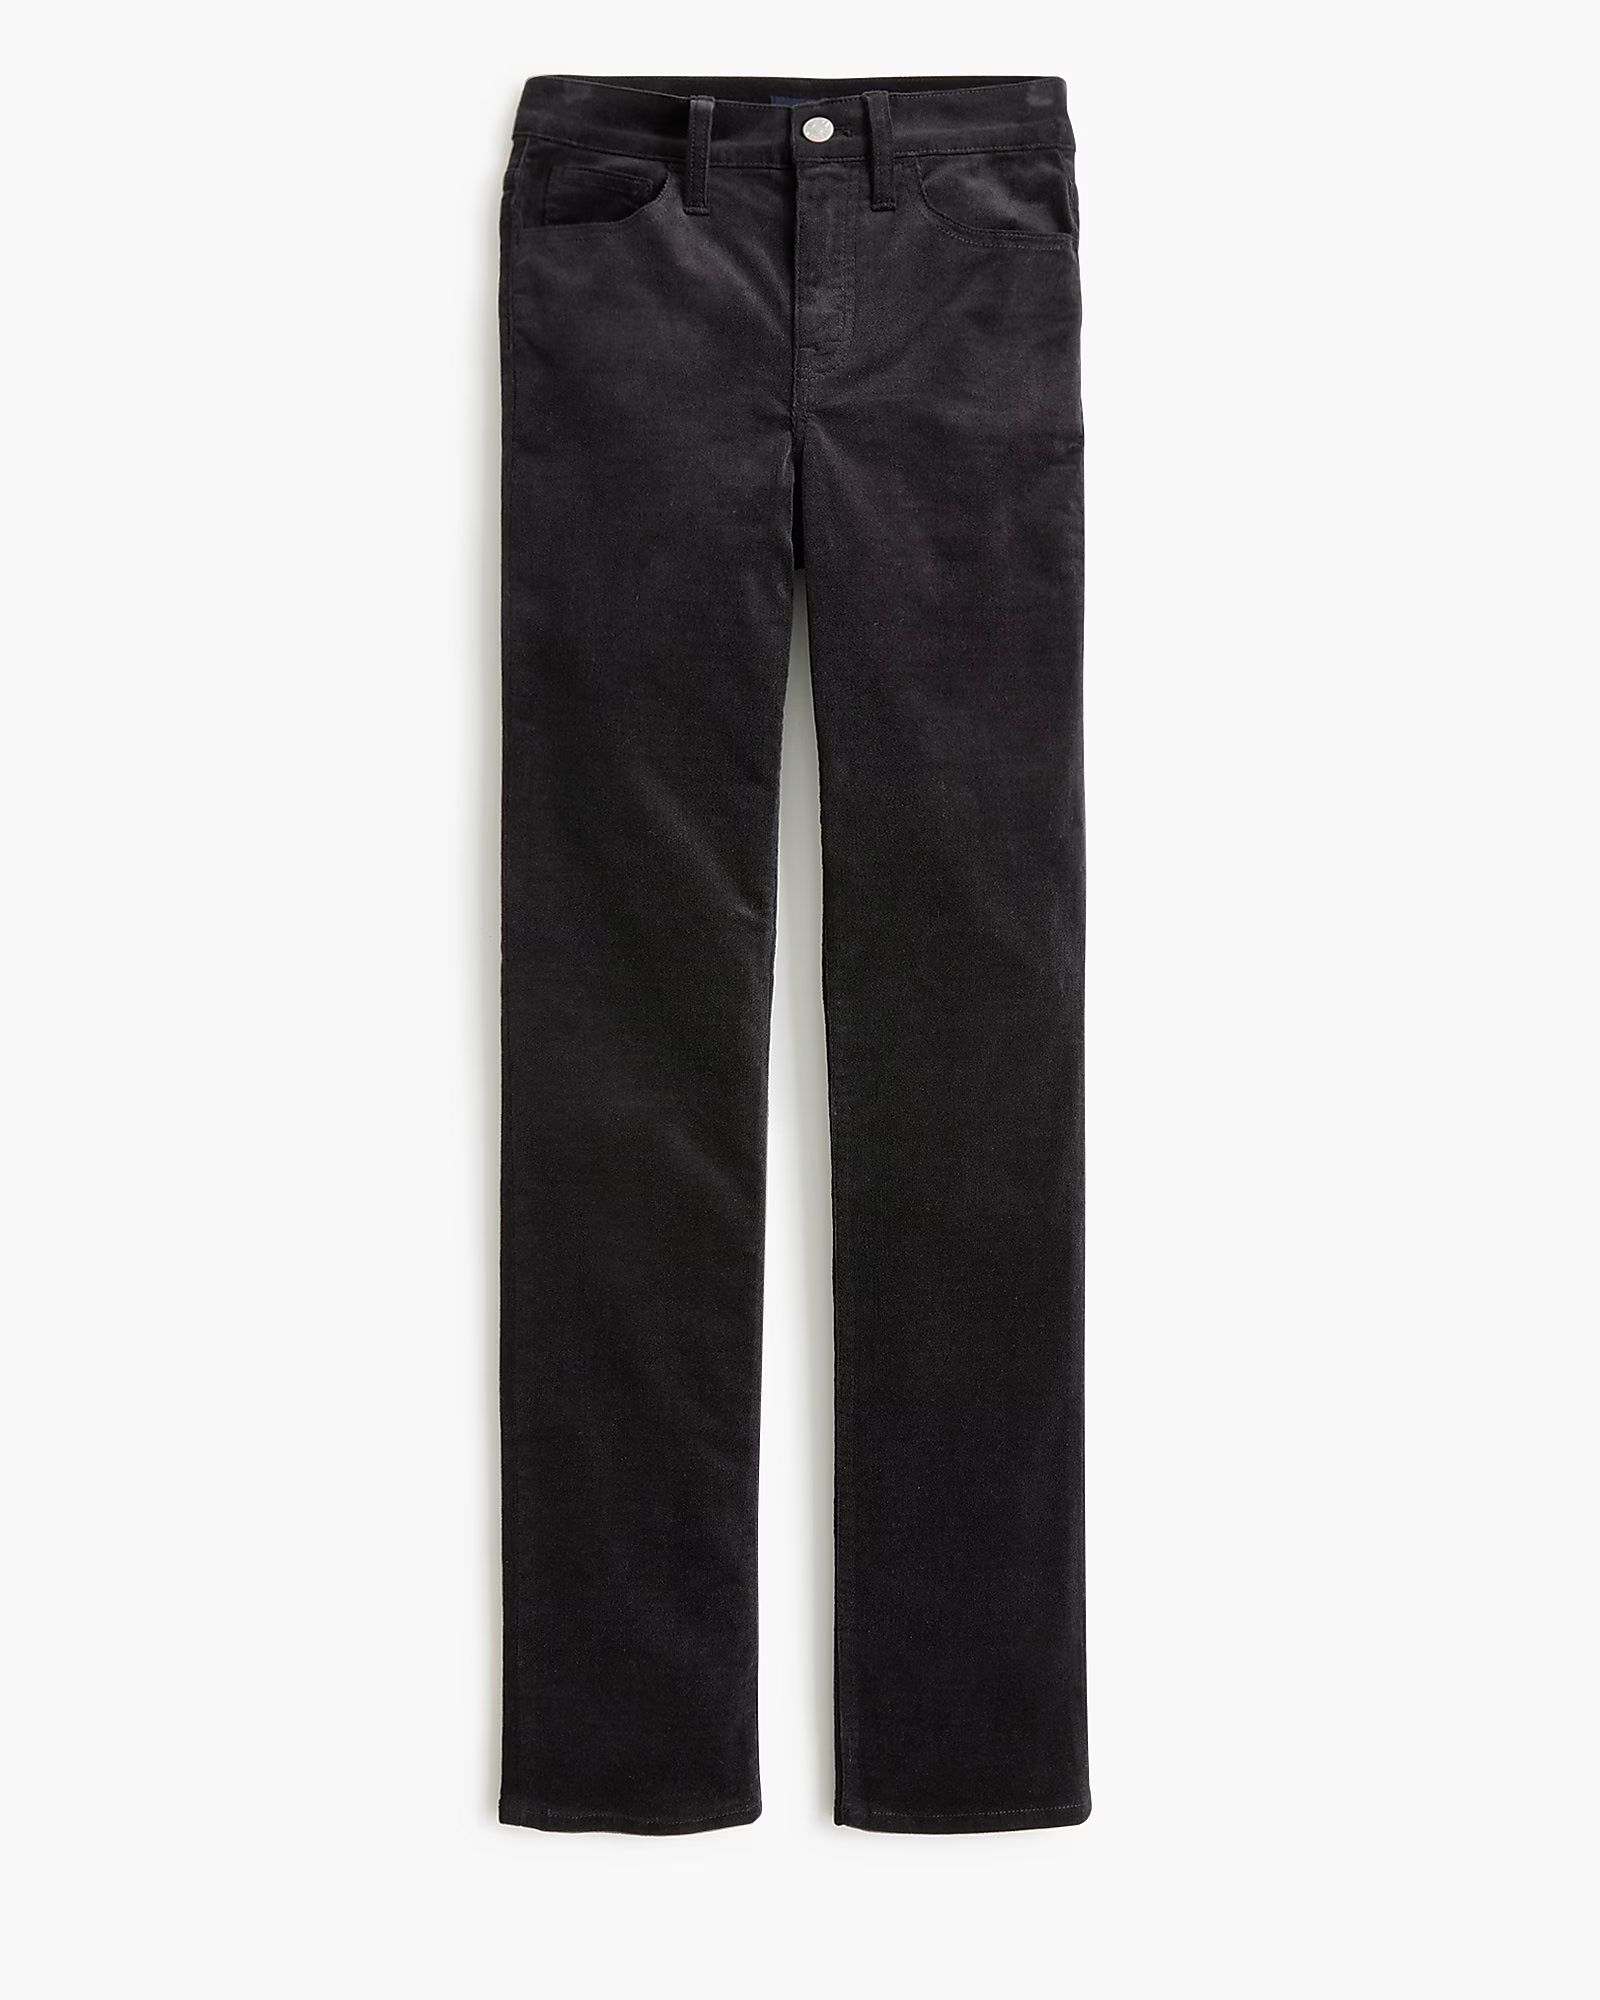 Corduroy full-length essential straight pant | J.Crew Factory